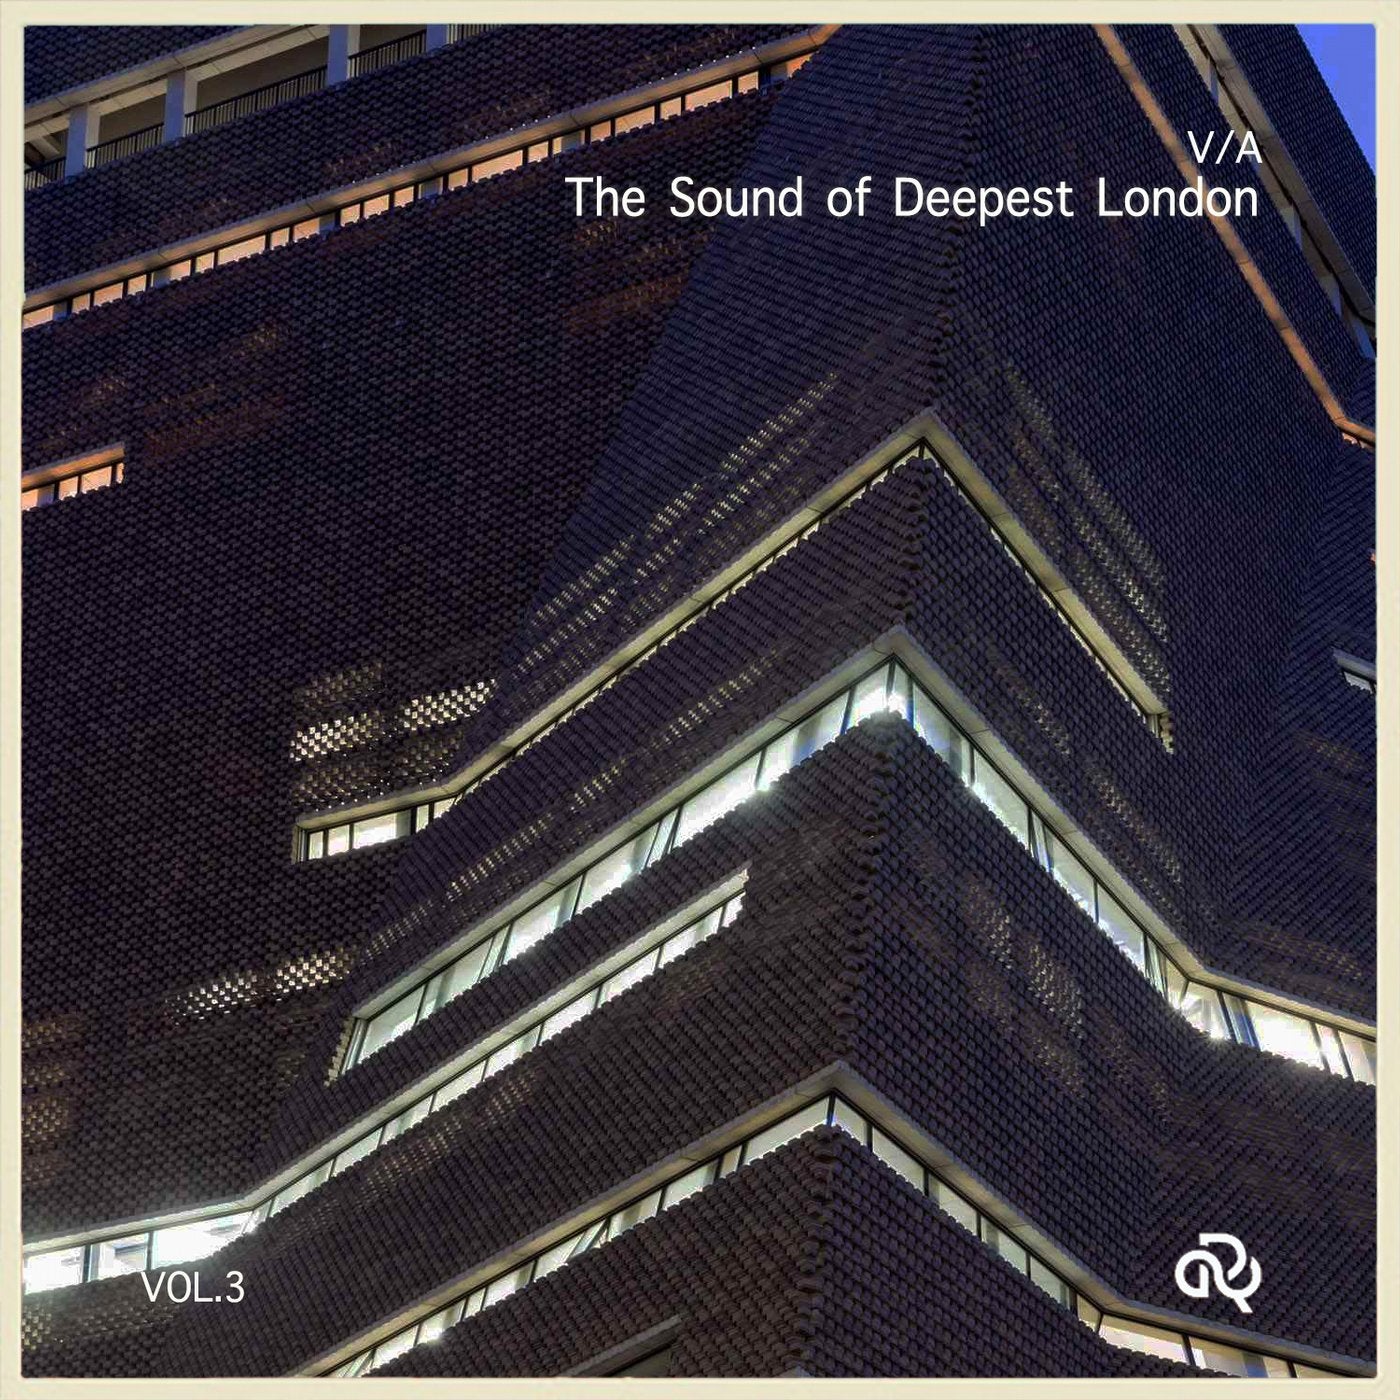 V/A The Sound of Deepest London VOL.3